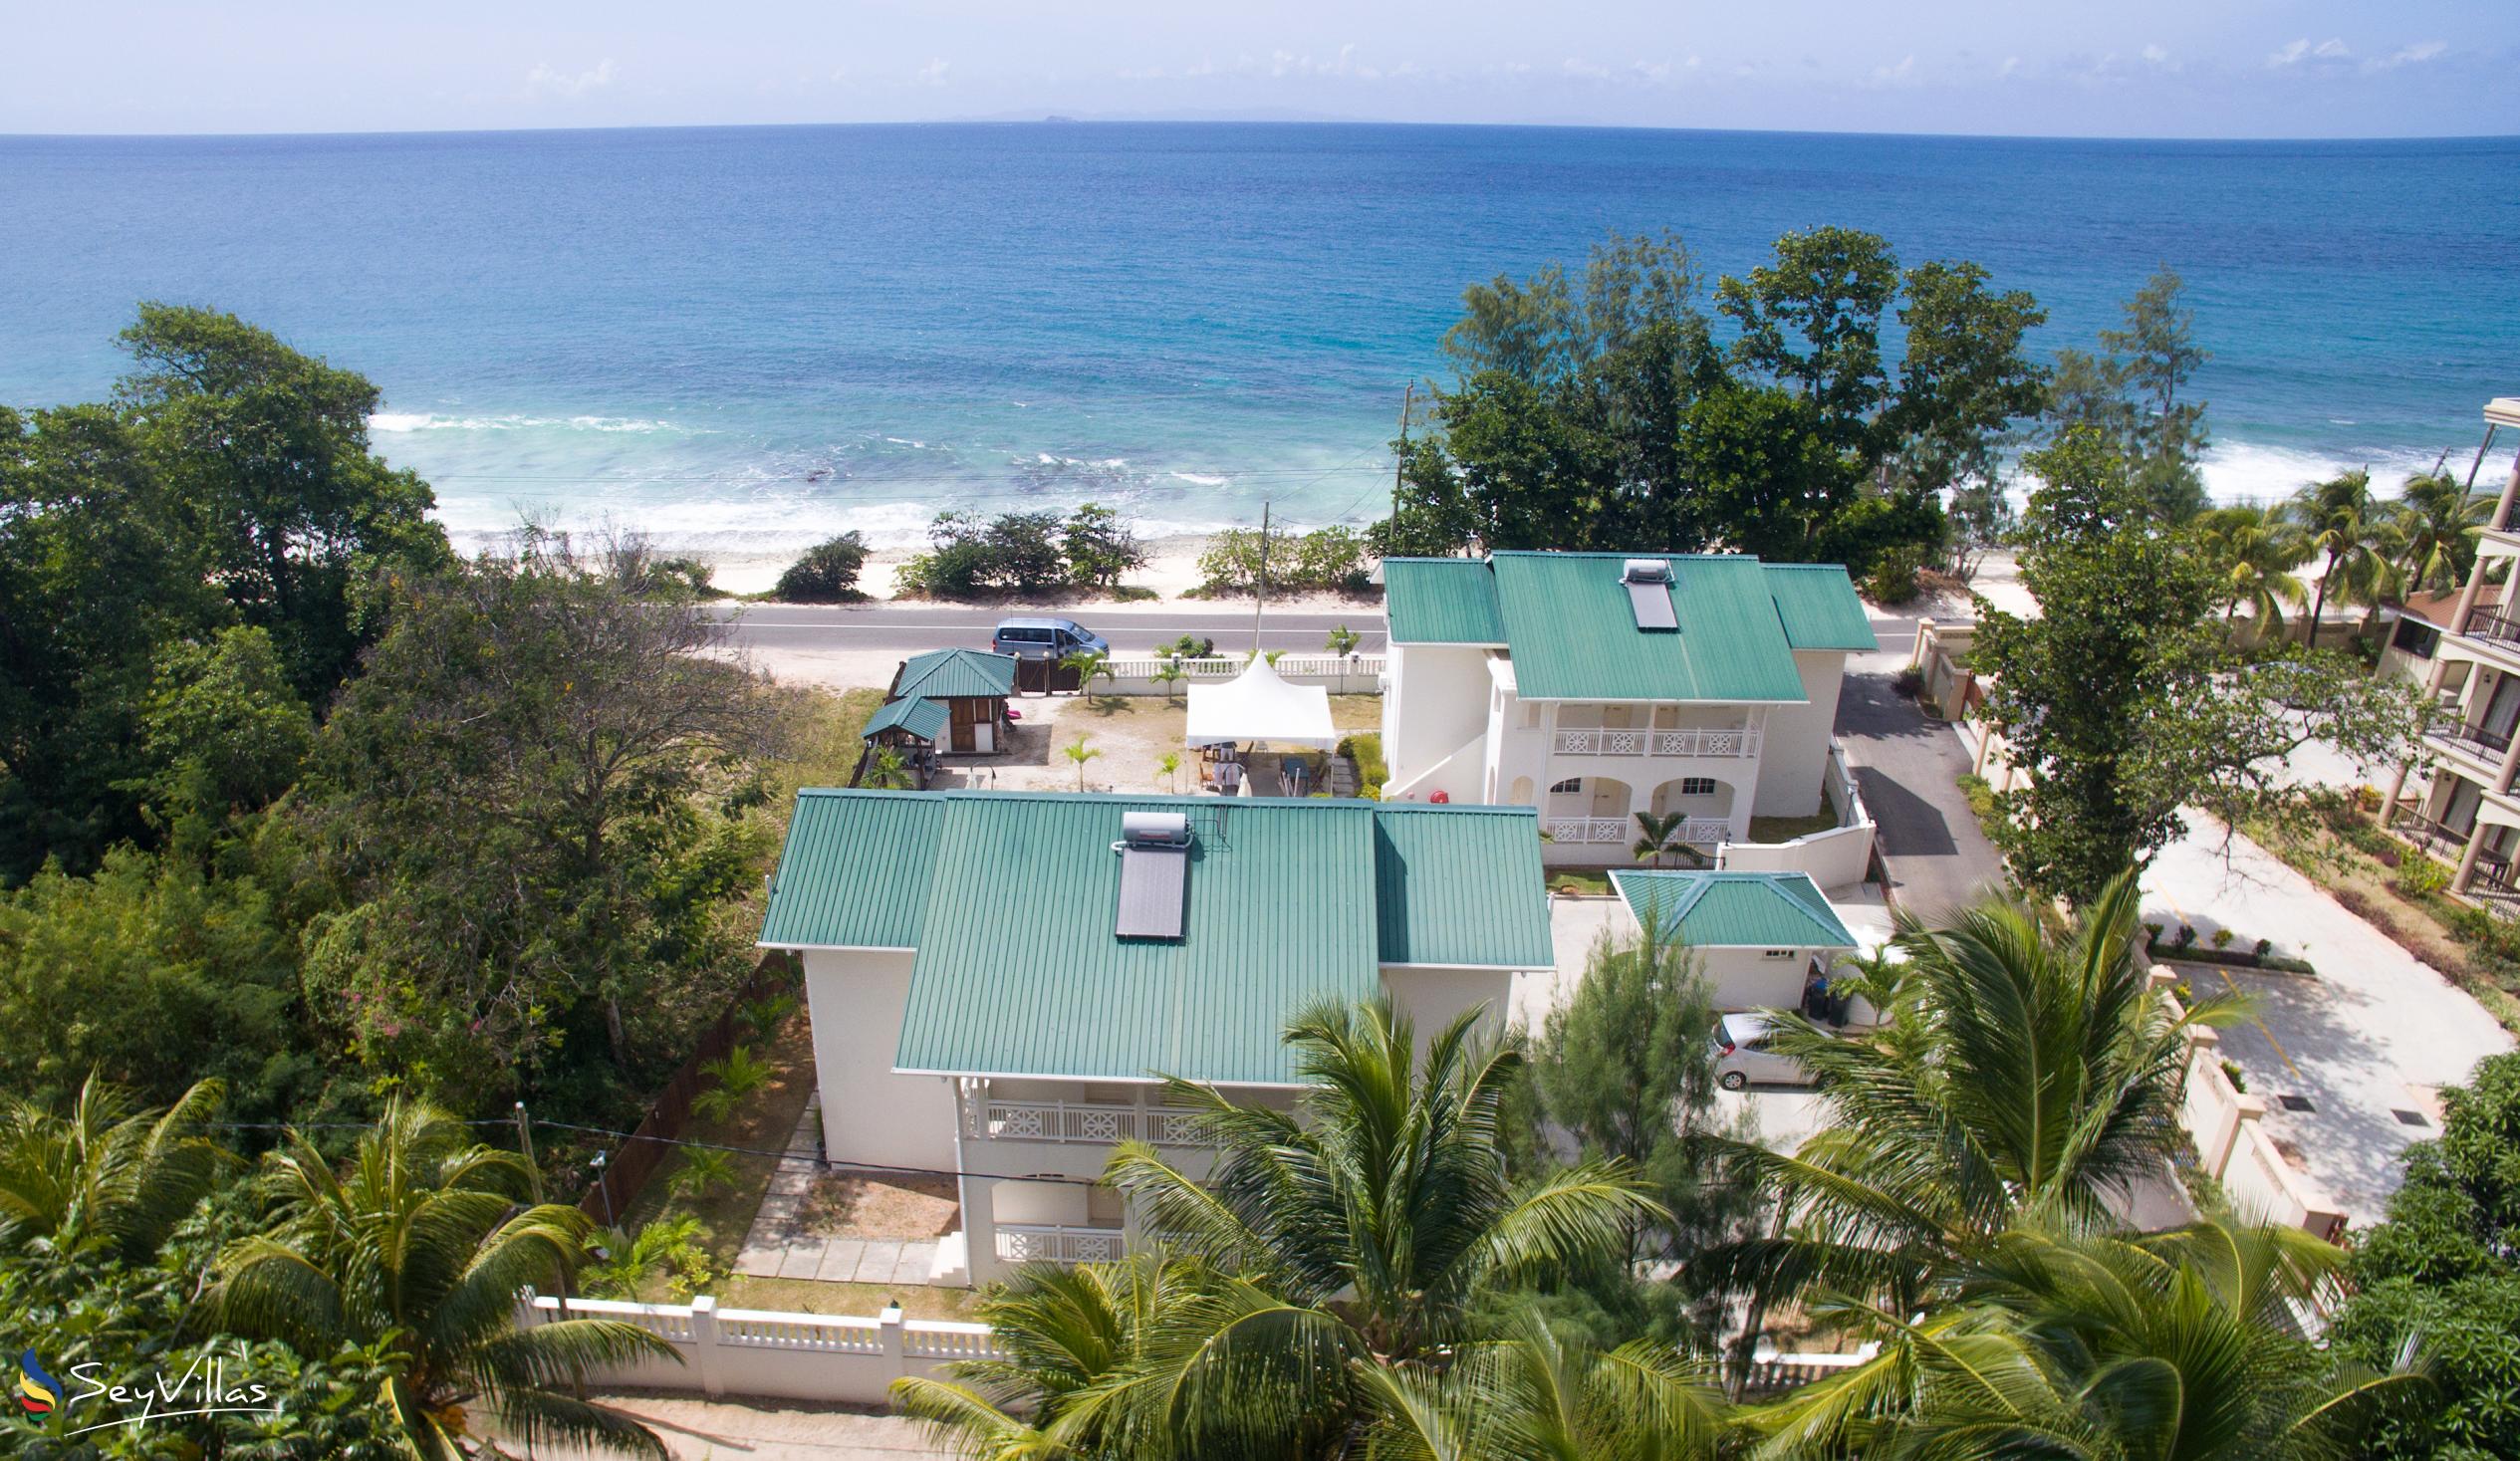 Photo 2: Villa Koket - Outdoor area - Mahé (Seychelles)